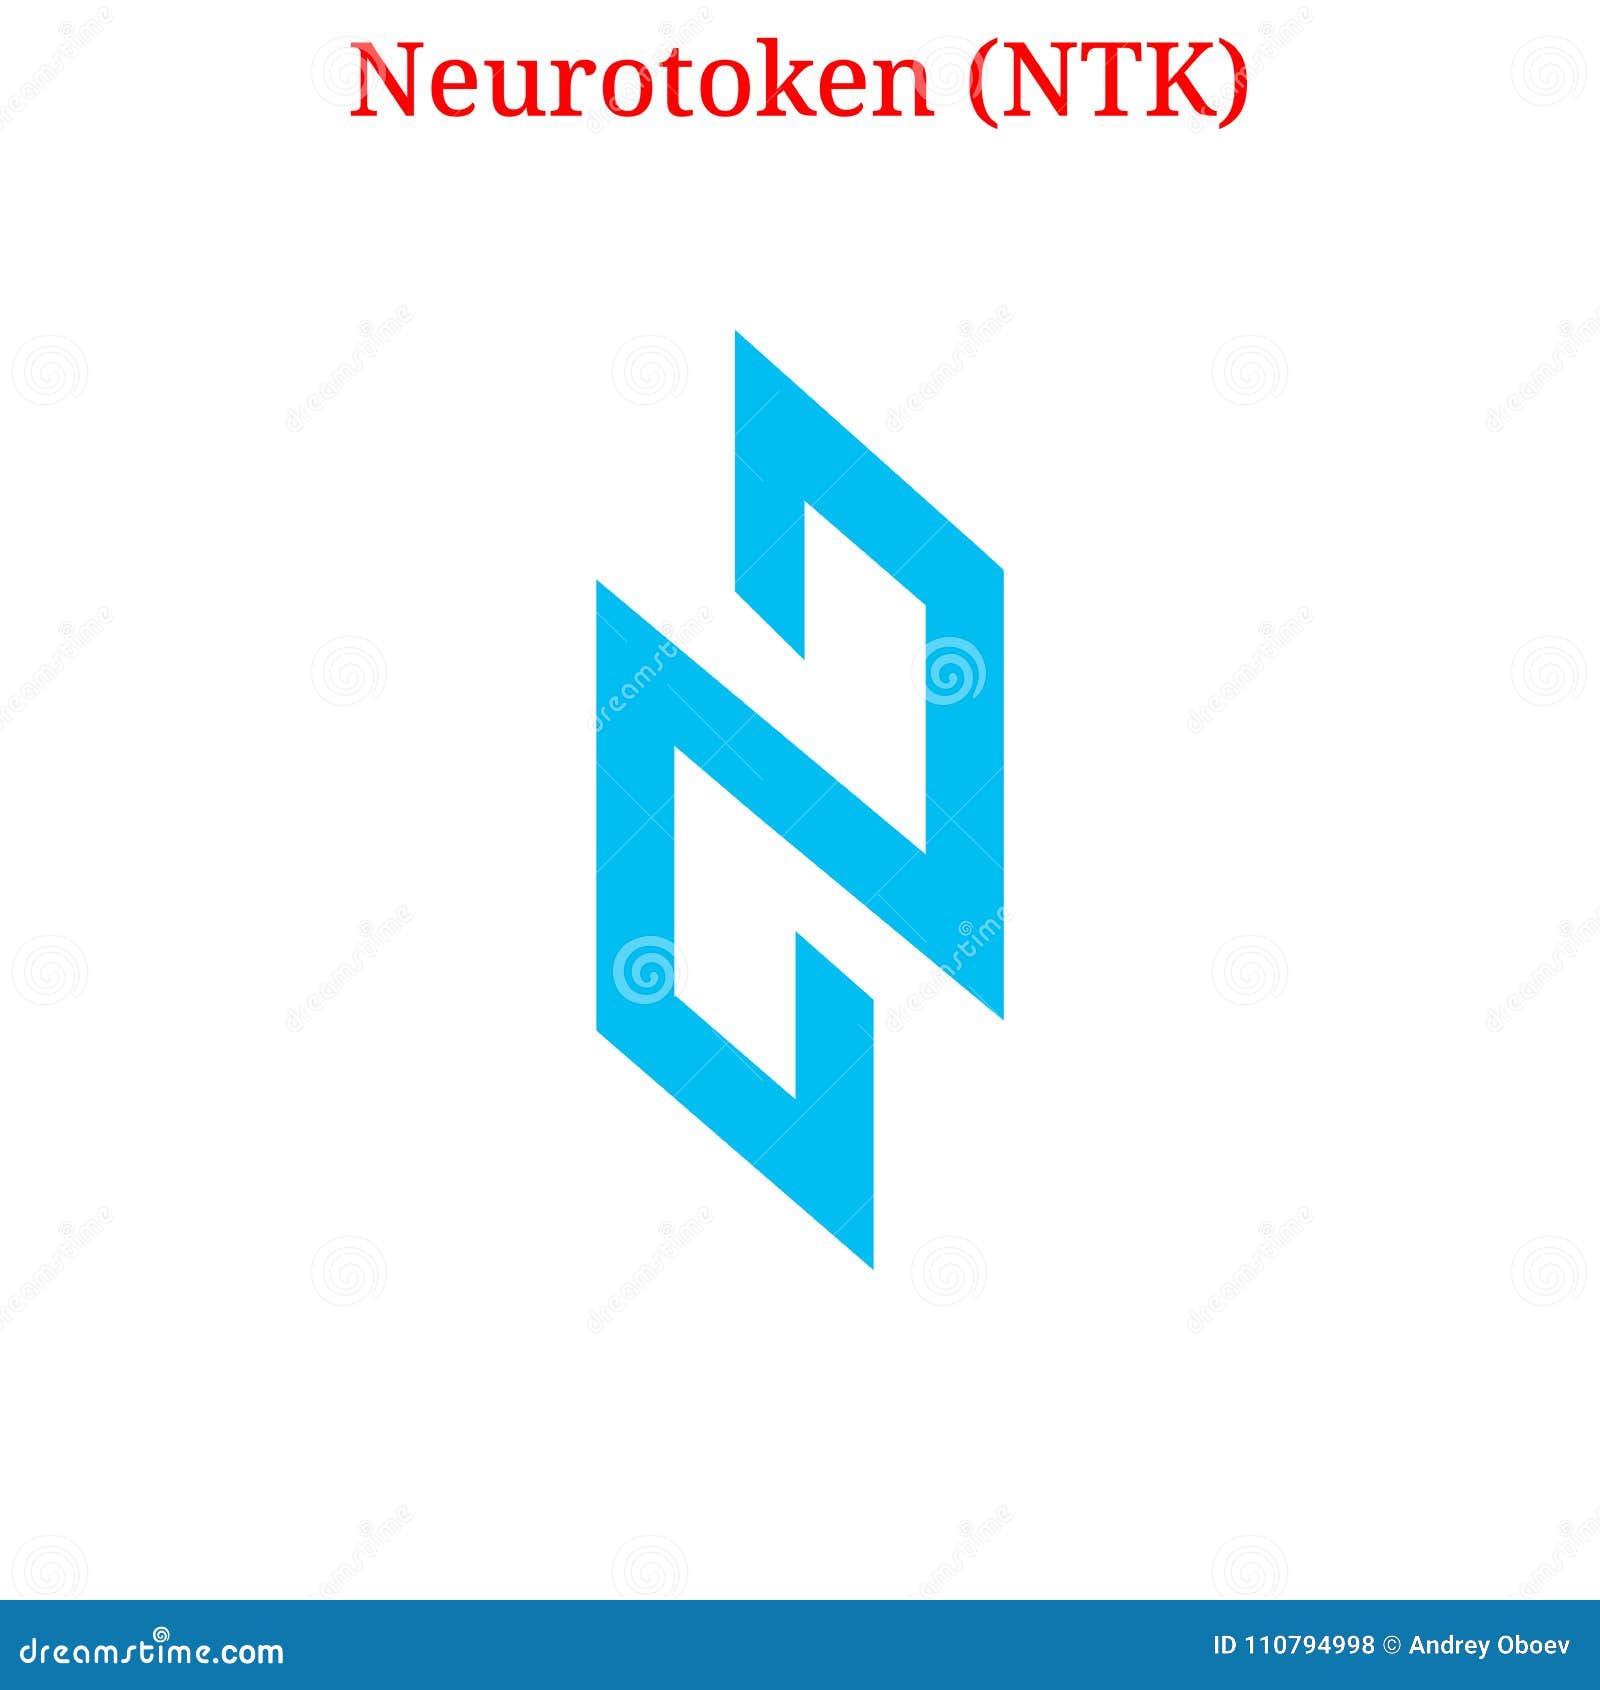 Neurotoken price today, NTK to USD live price, marketcap and chart | CoinMarketCap